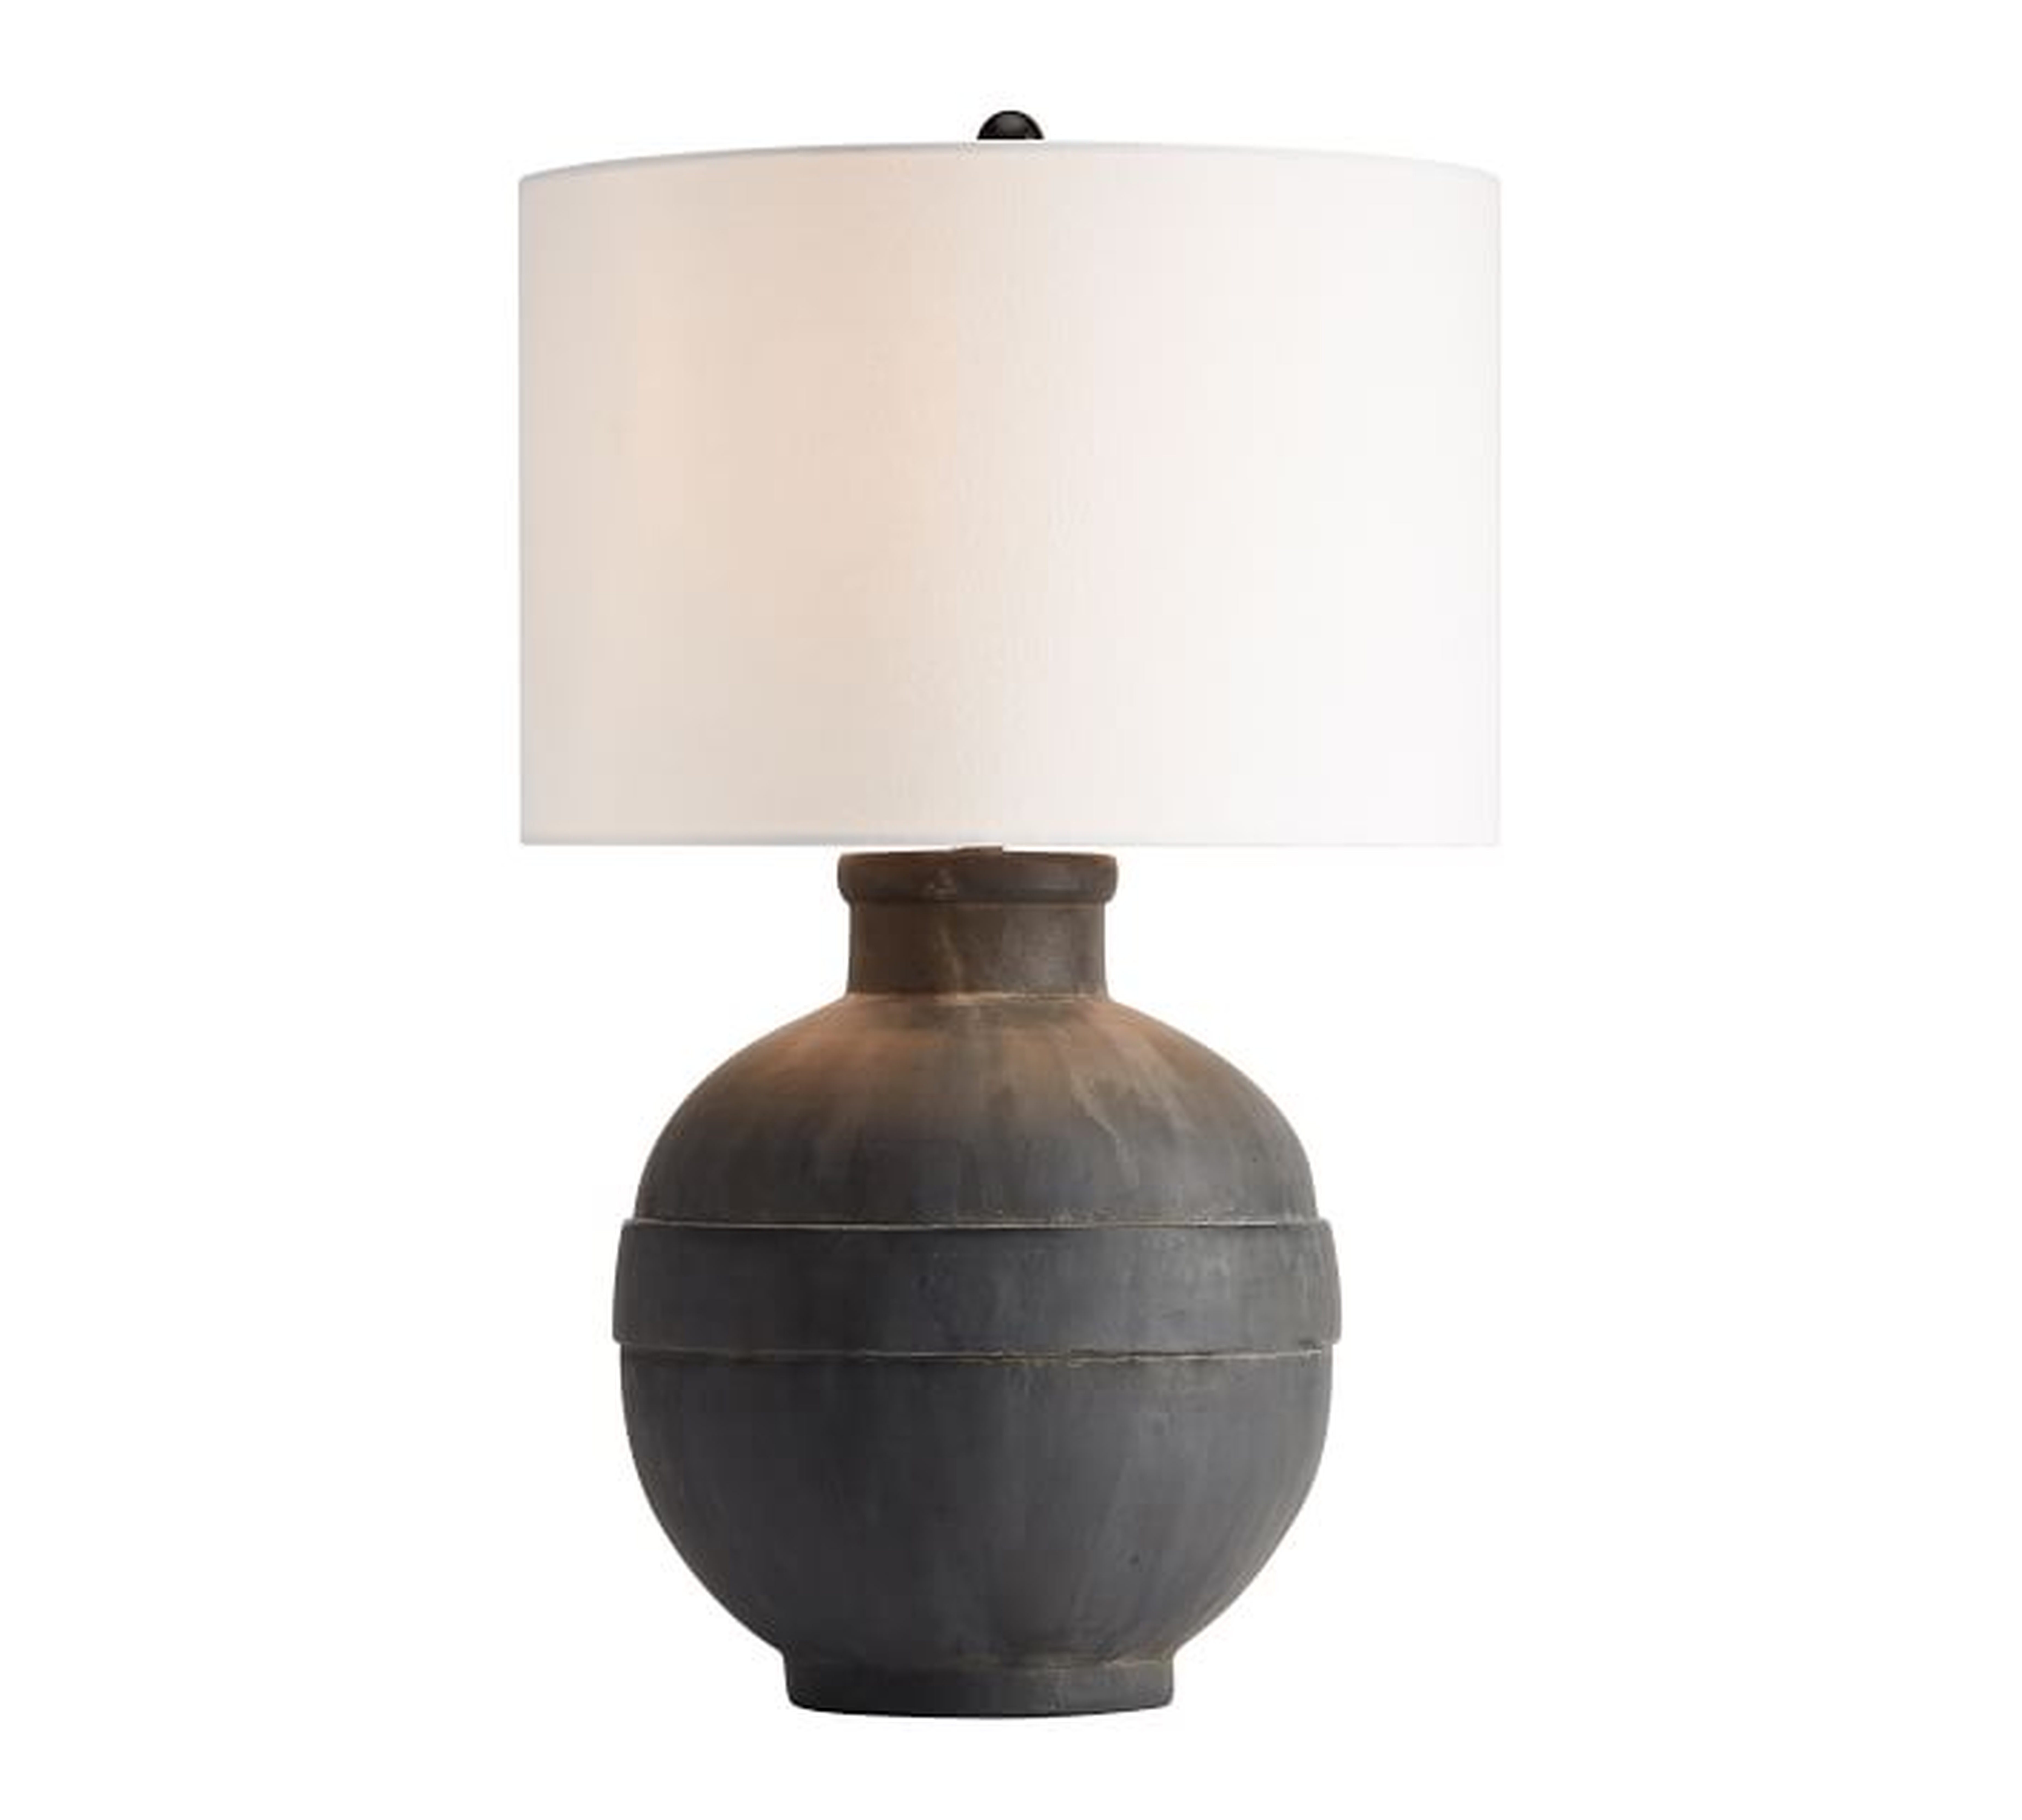 Faris Ceramic Table Lamp, Black, Small - Pottery Barn